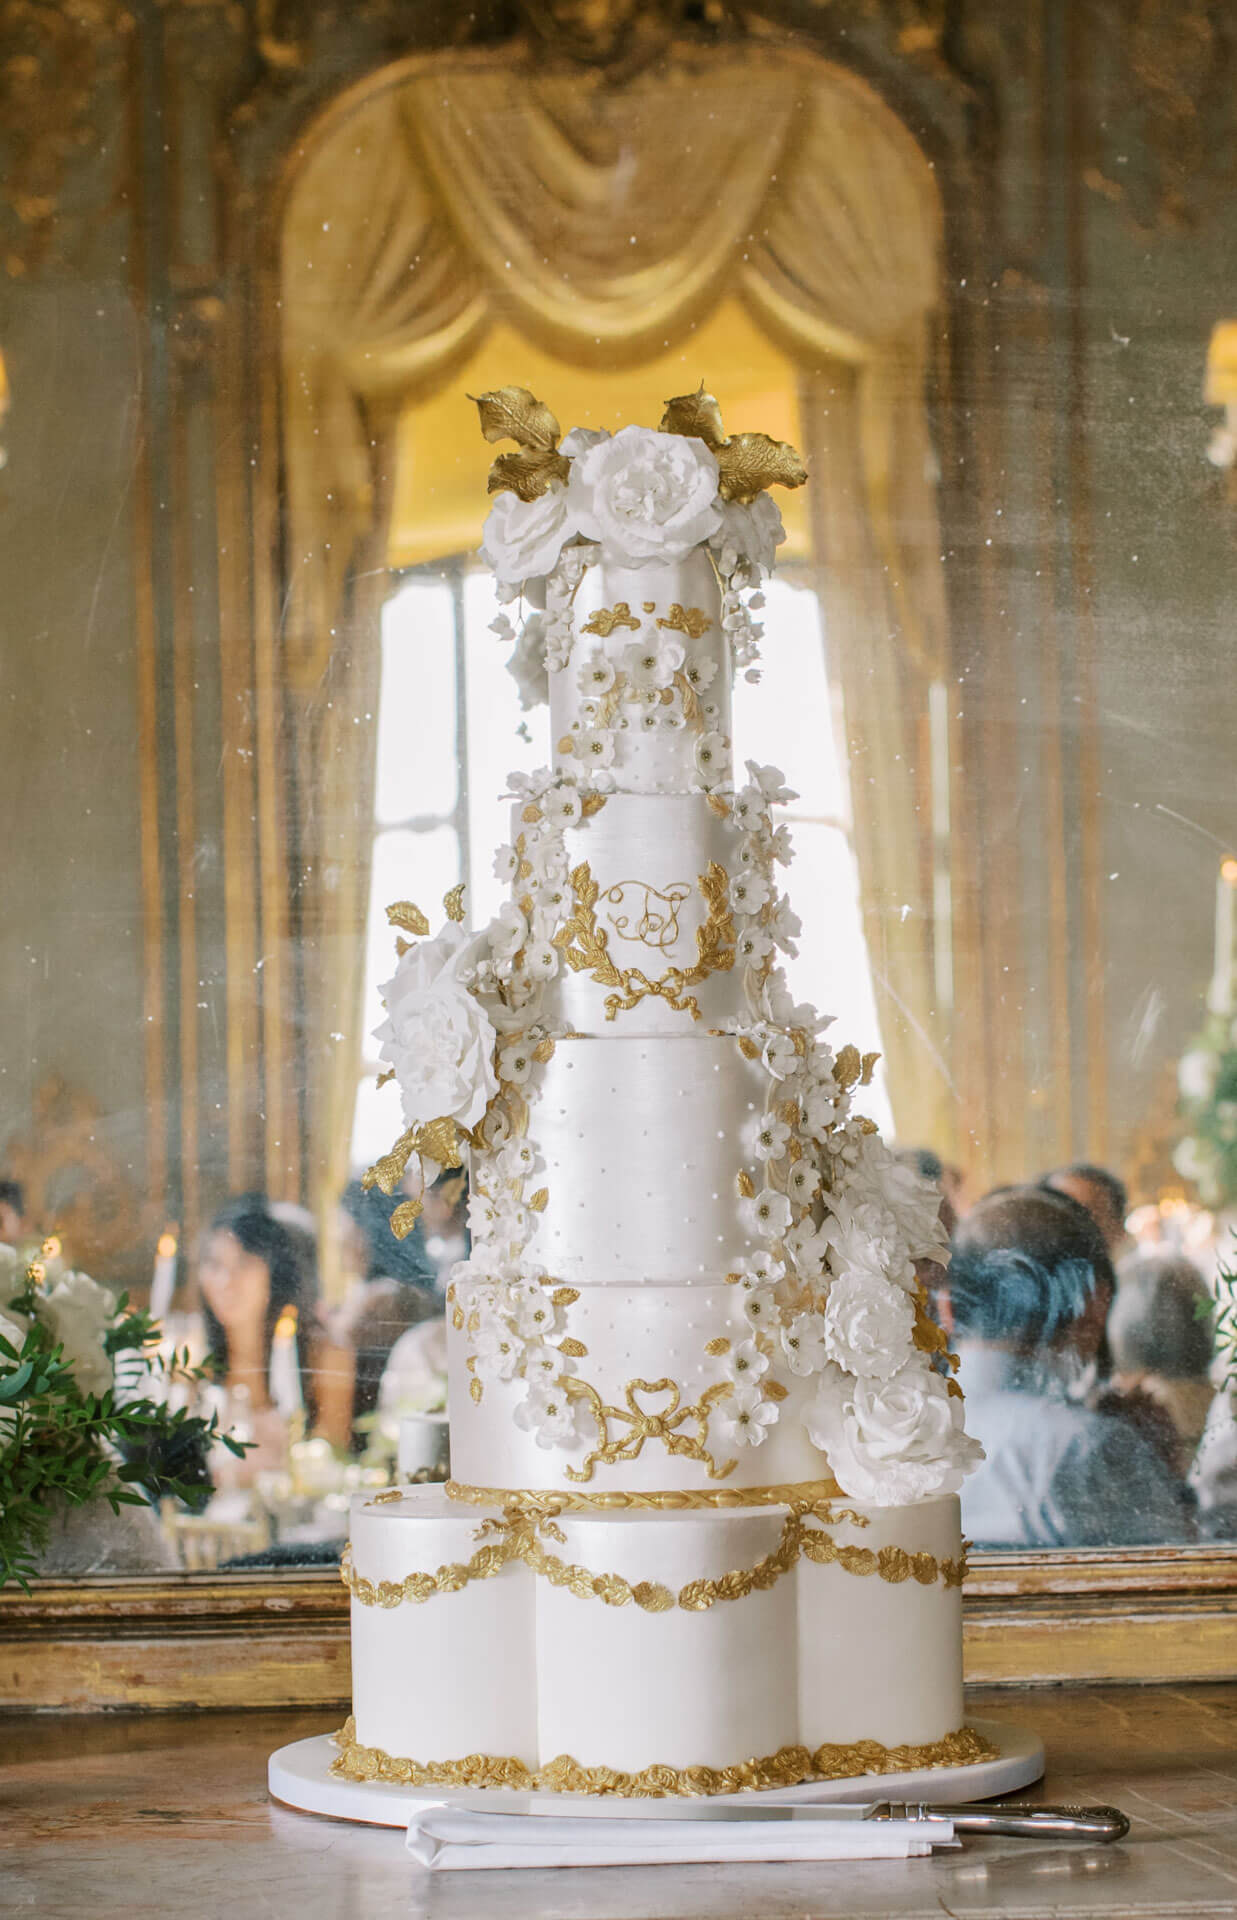 Theodora By Yevnig at Cliveden House Luxury Wedding Cake photo-@andyourstory